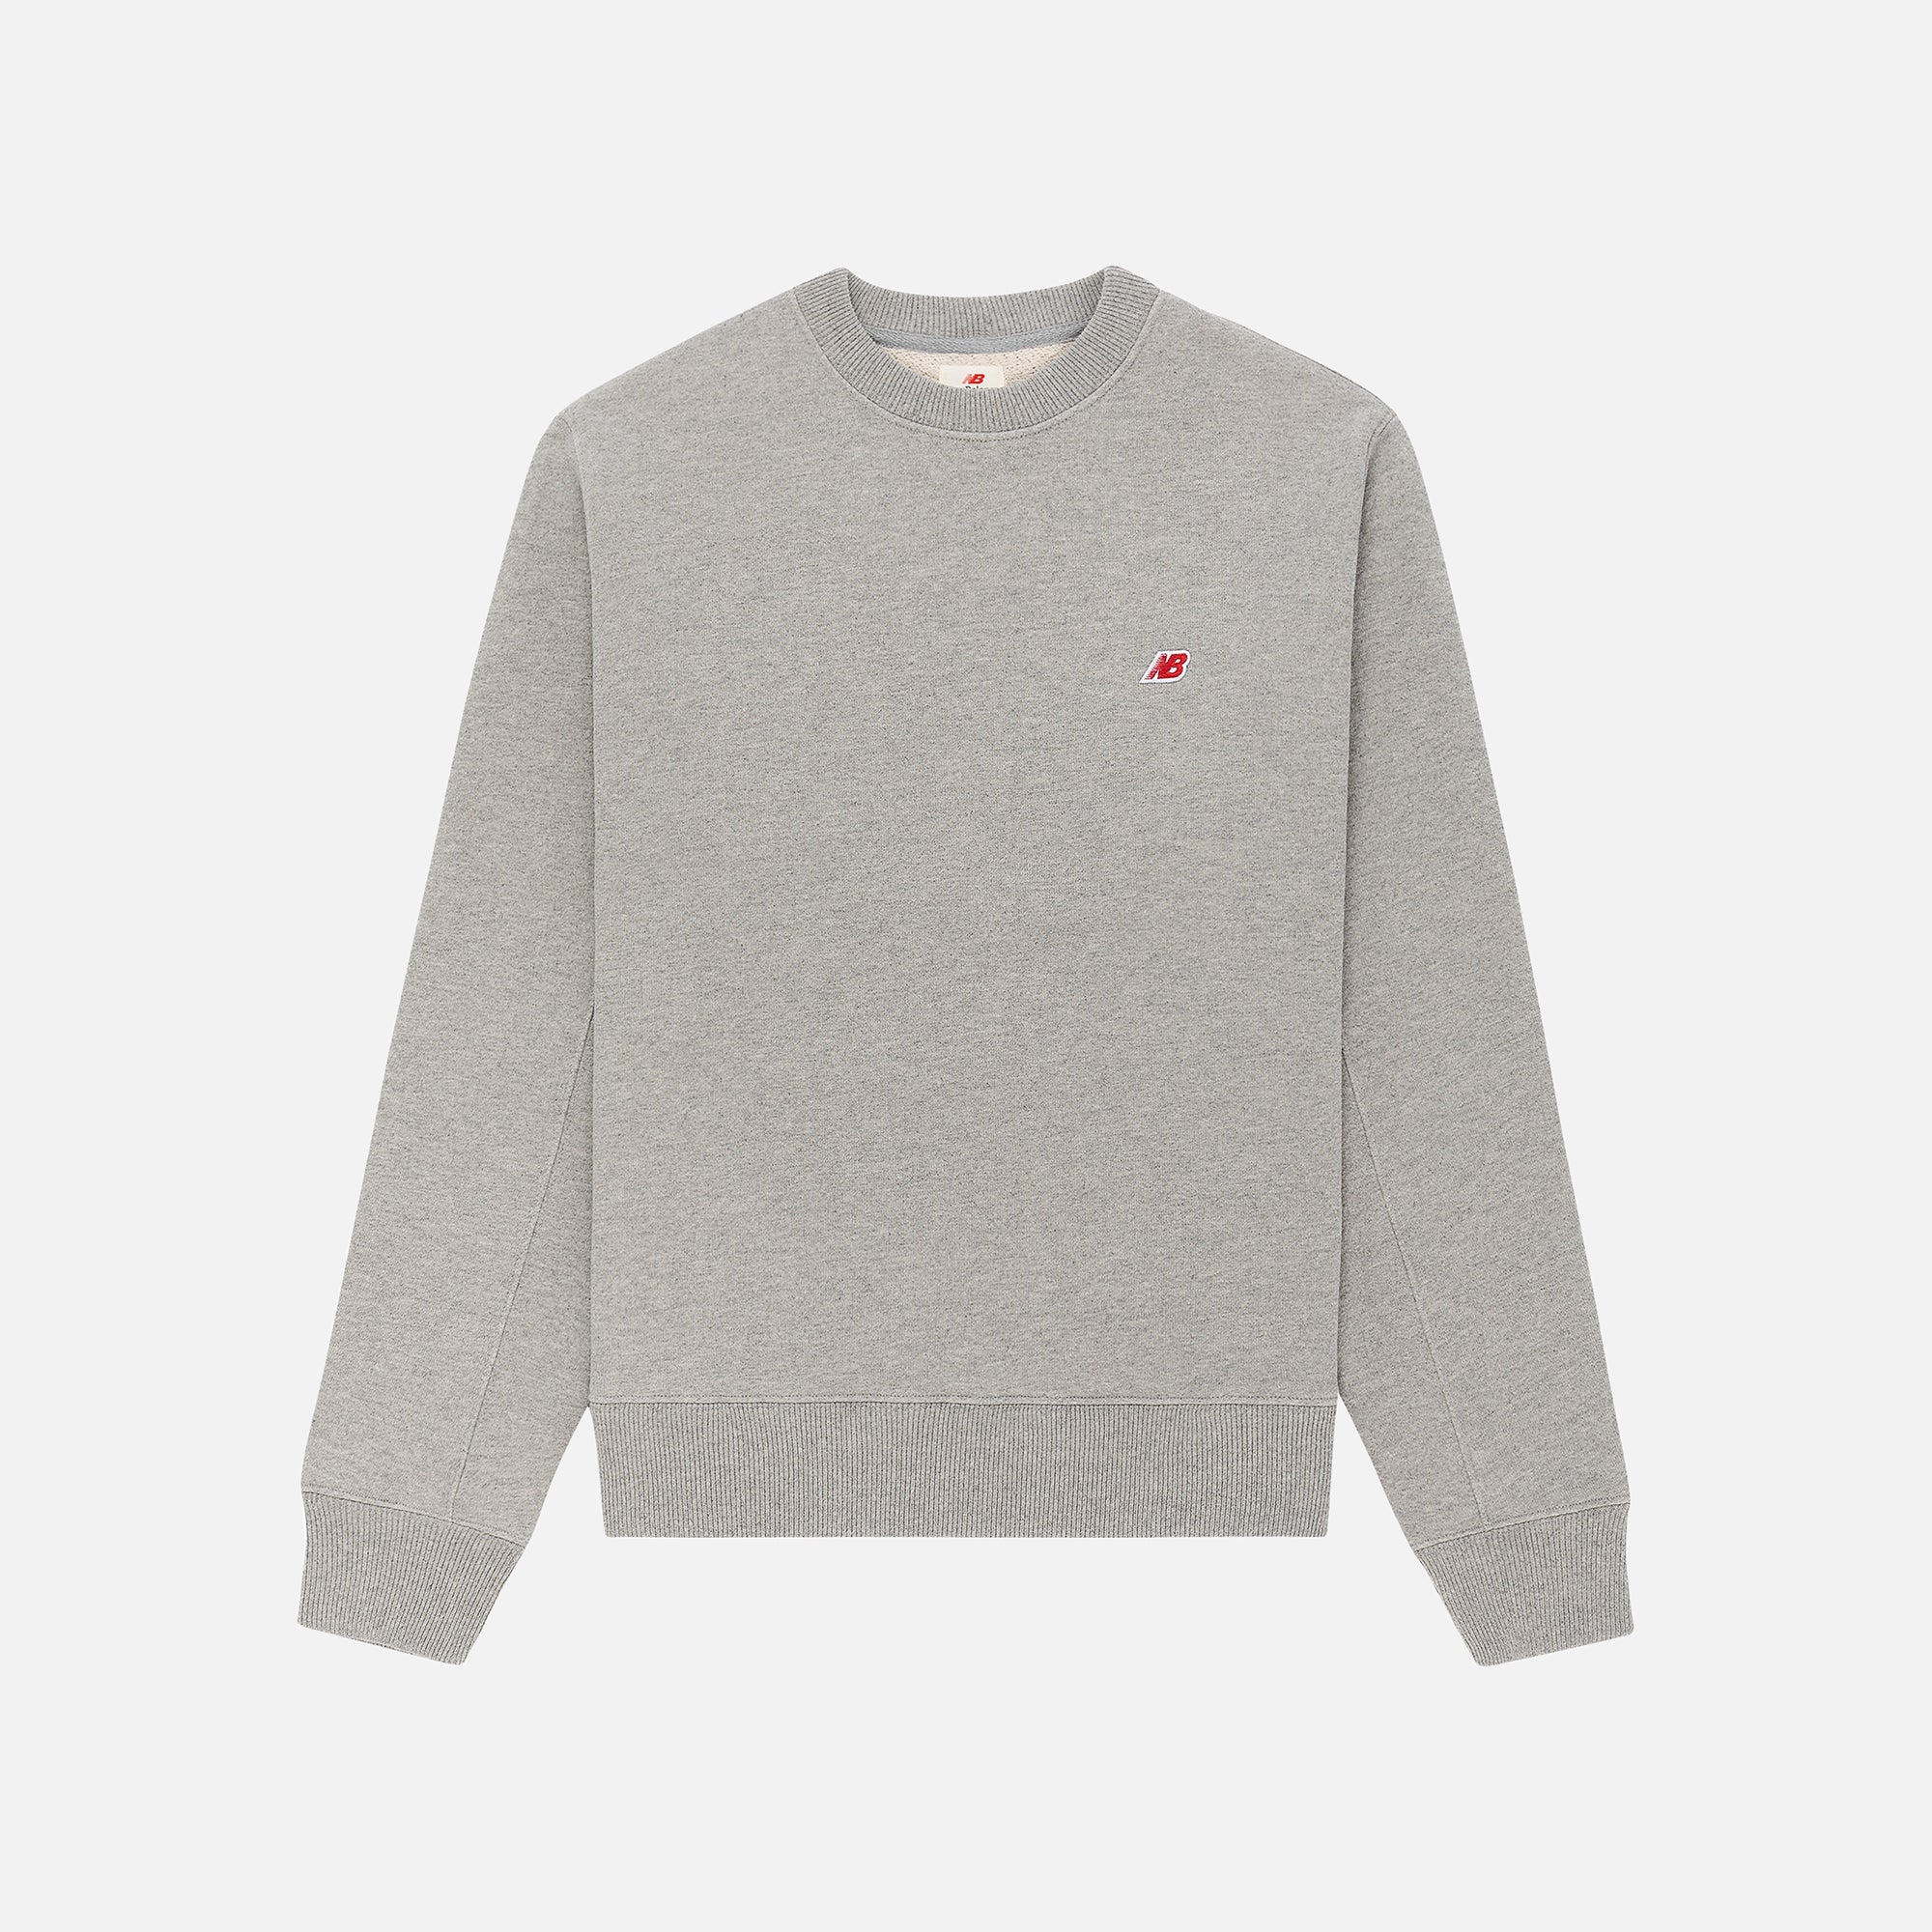 New Balance Made in USA Crew Sweatshirt - Athletic Grey – Kith